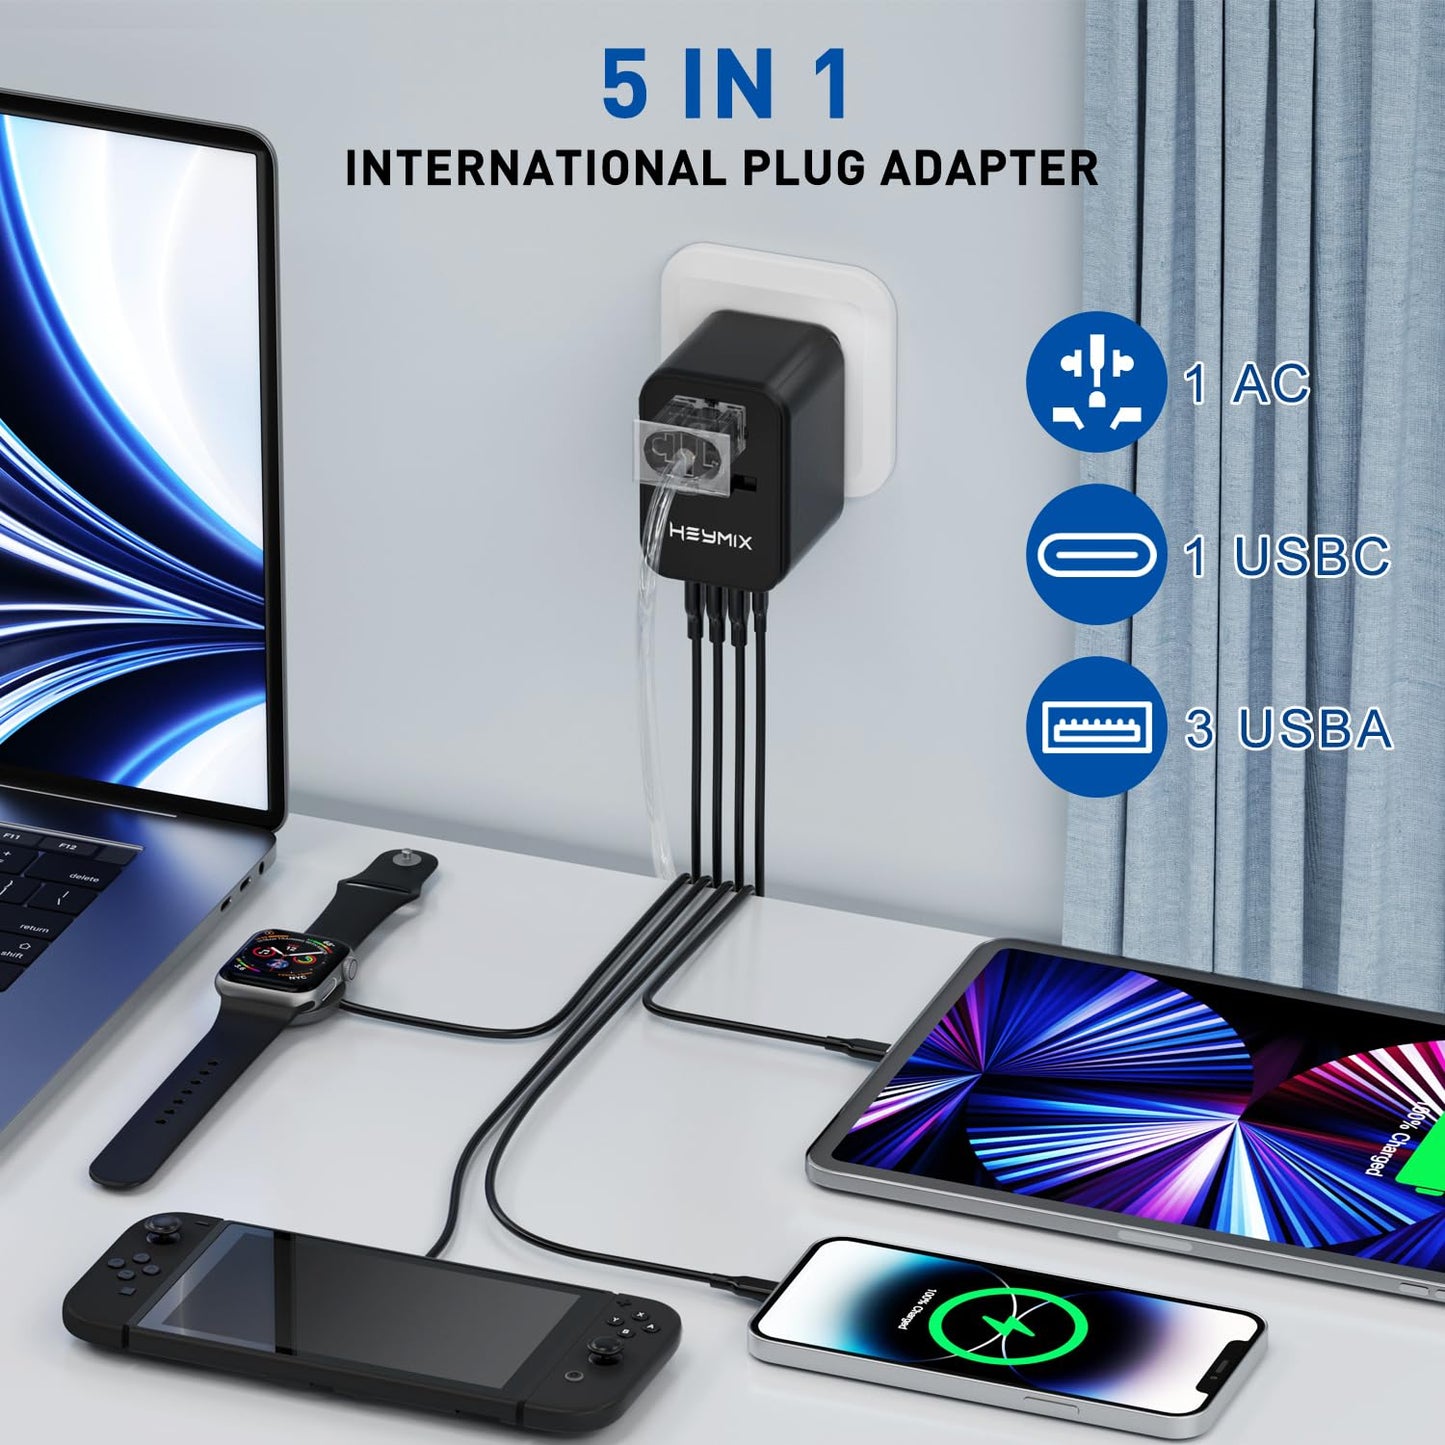 International plug adaptor